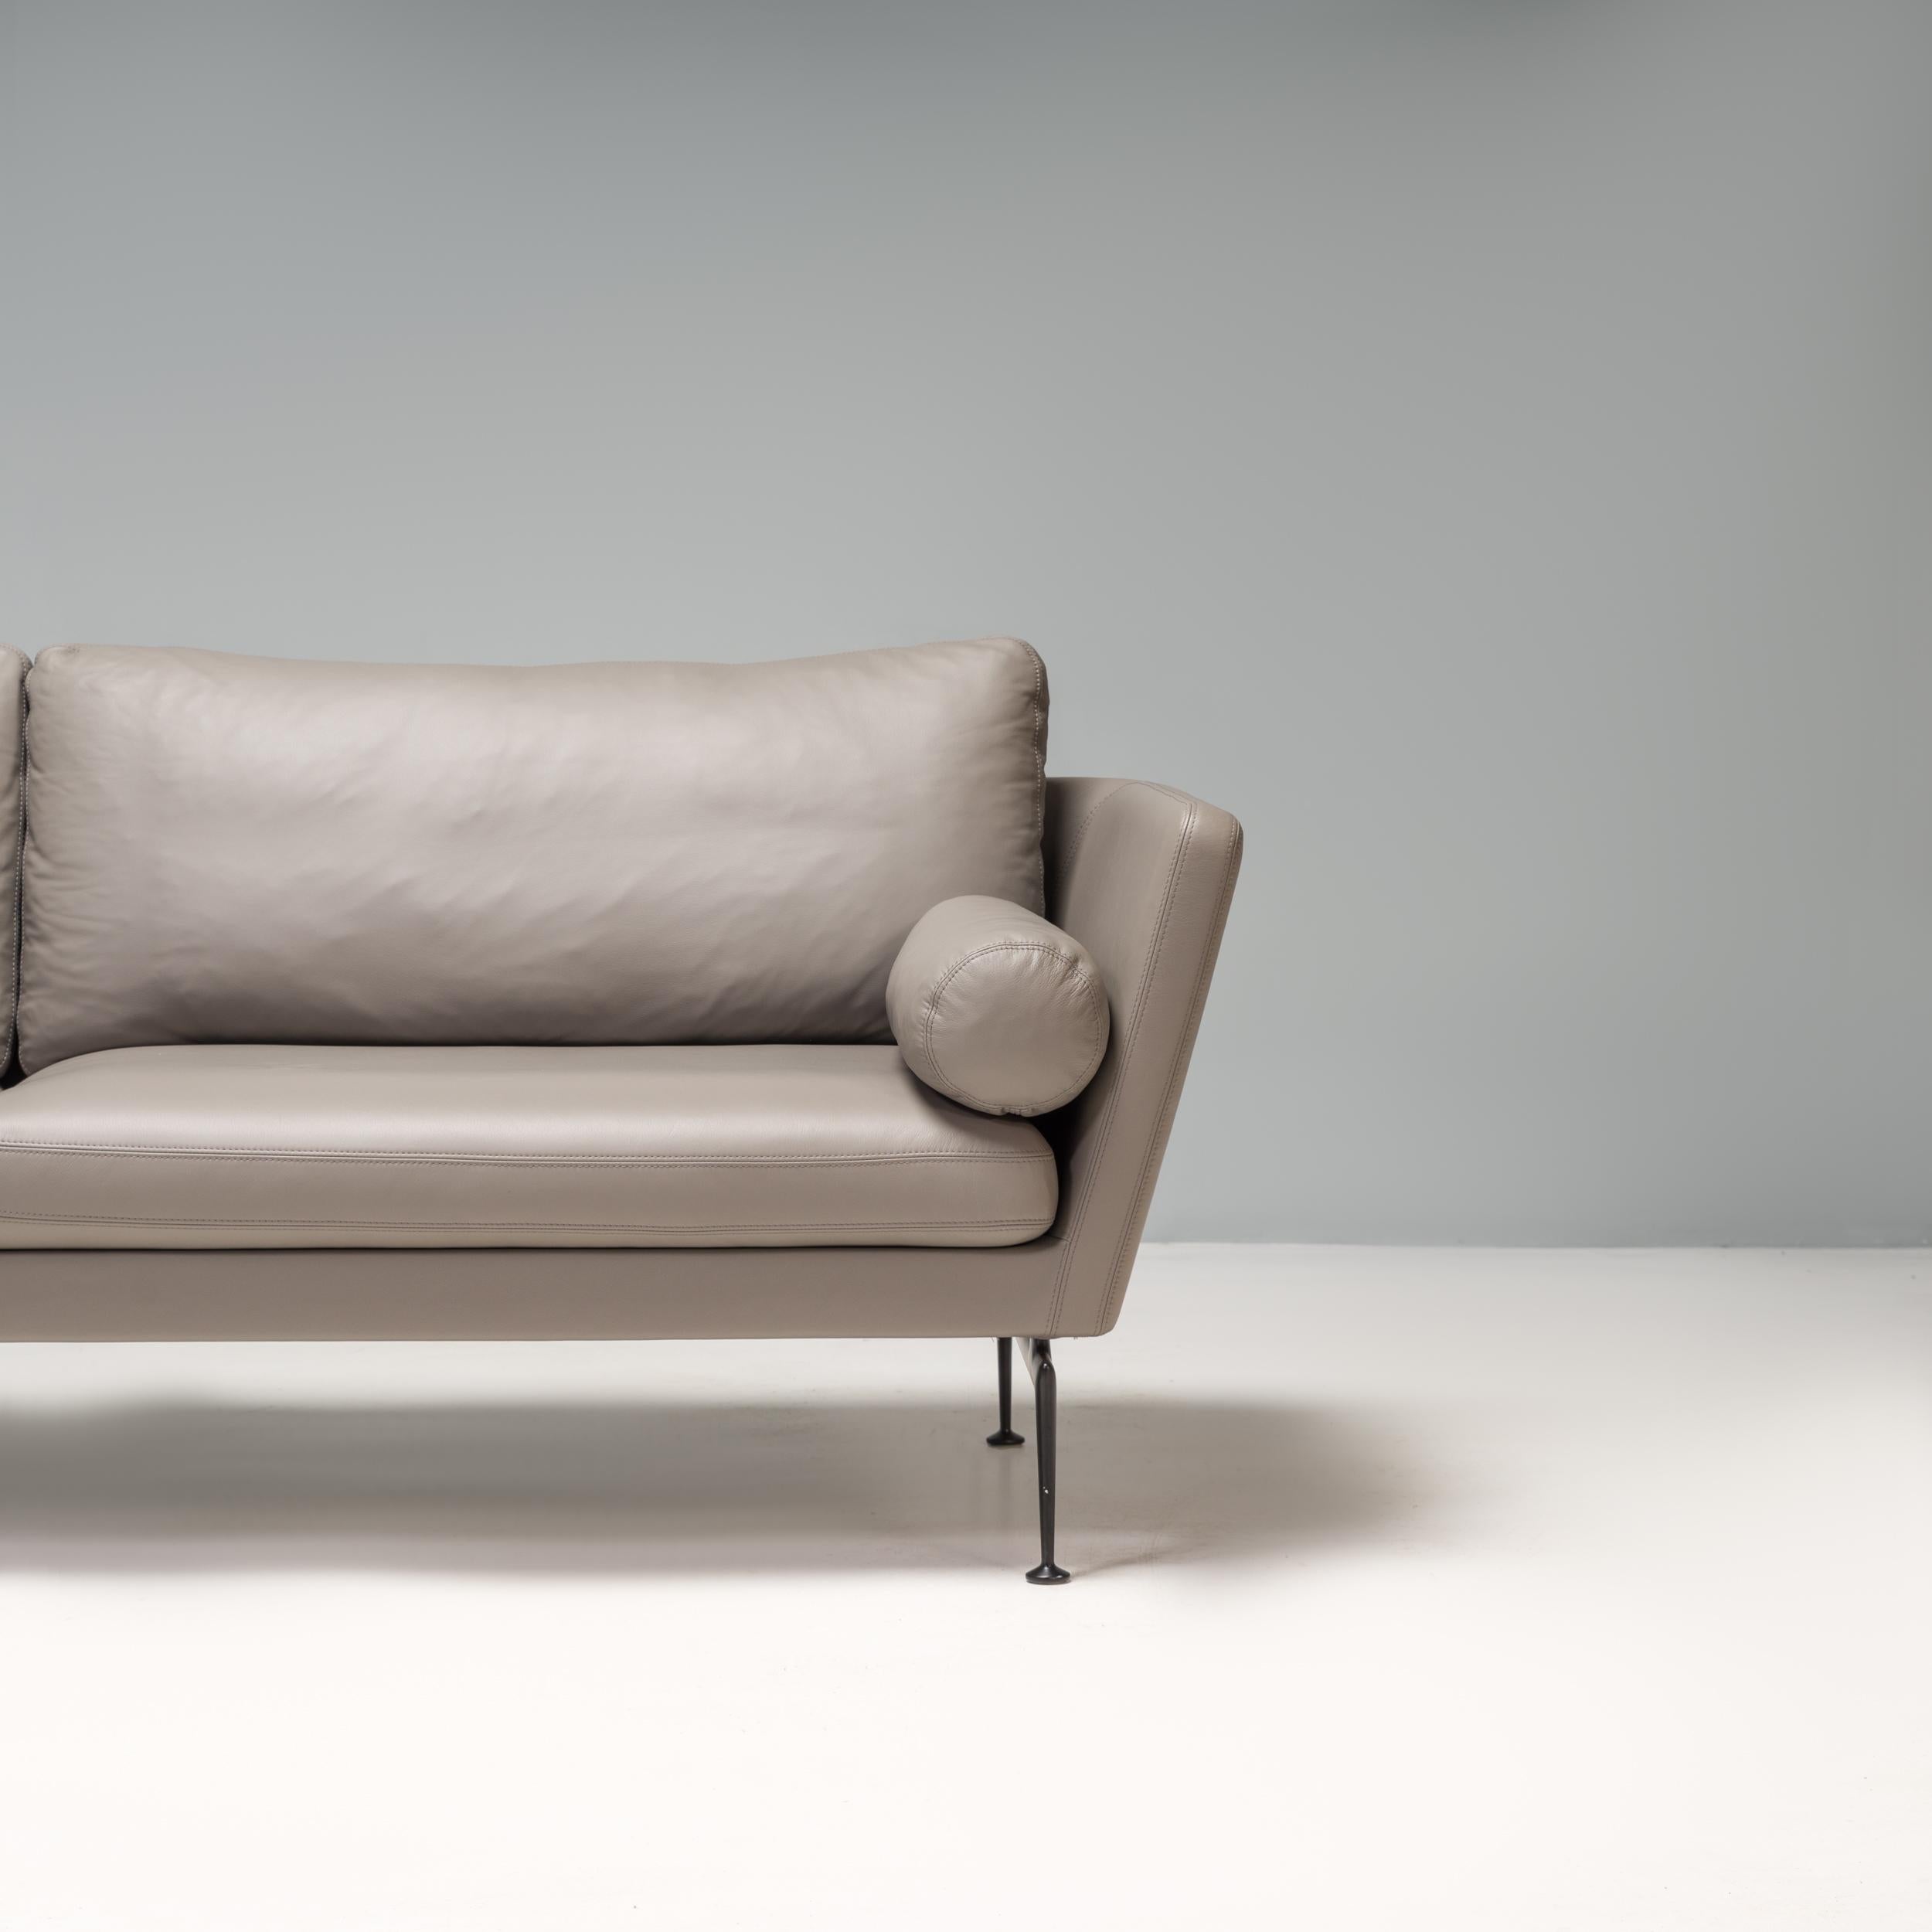 Antonio Citterio for Vitra Grey Leather Suita Three-Seat Sofa, 2021 For Sale 1